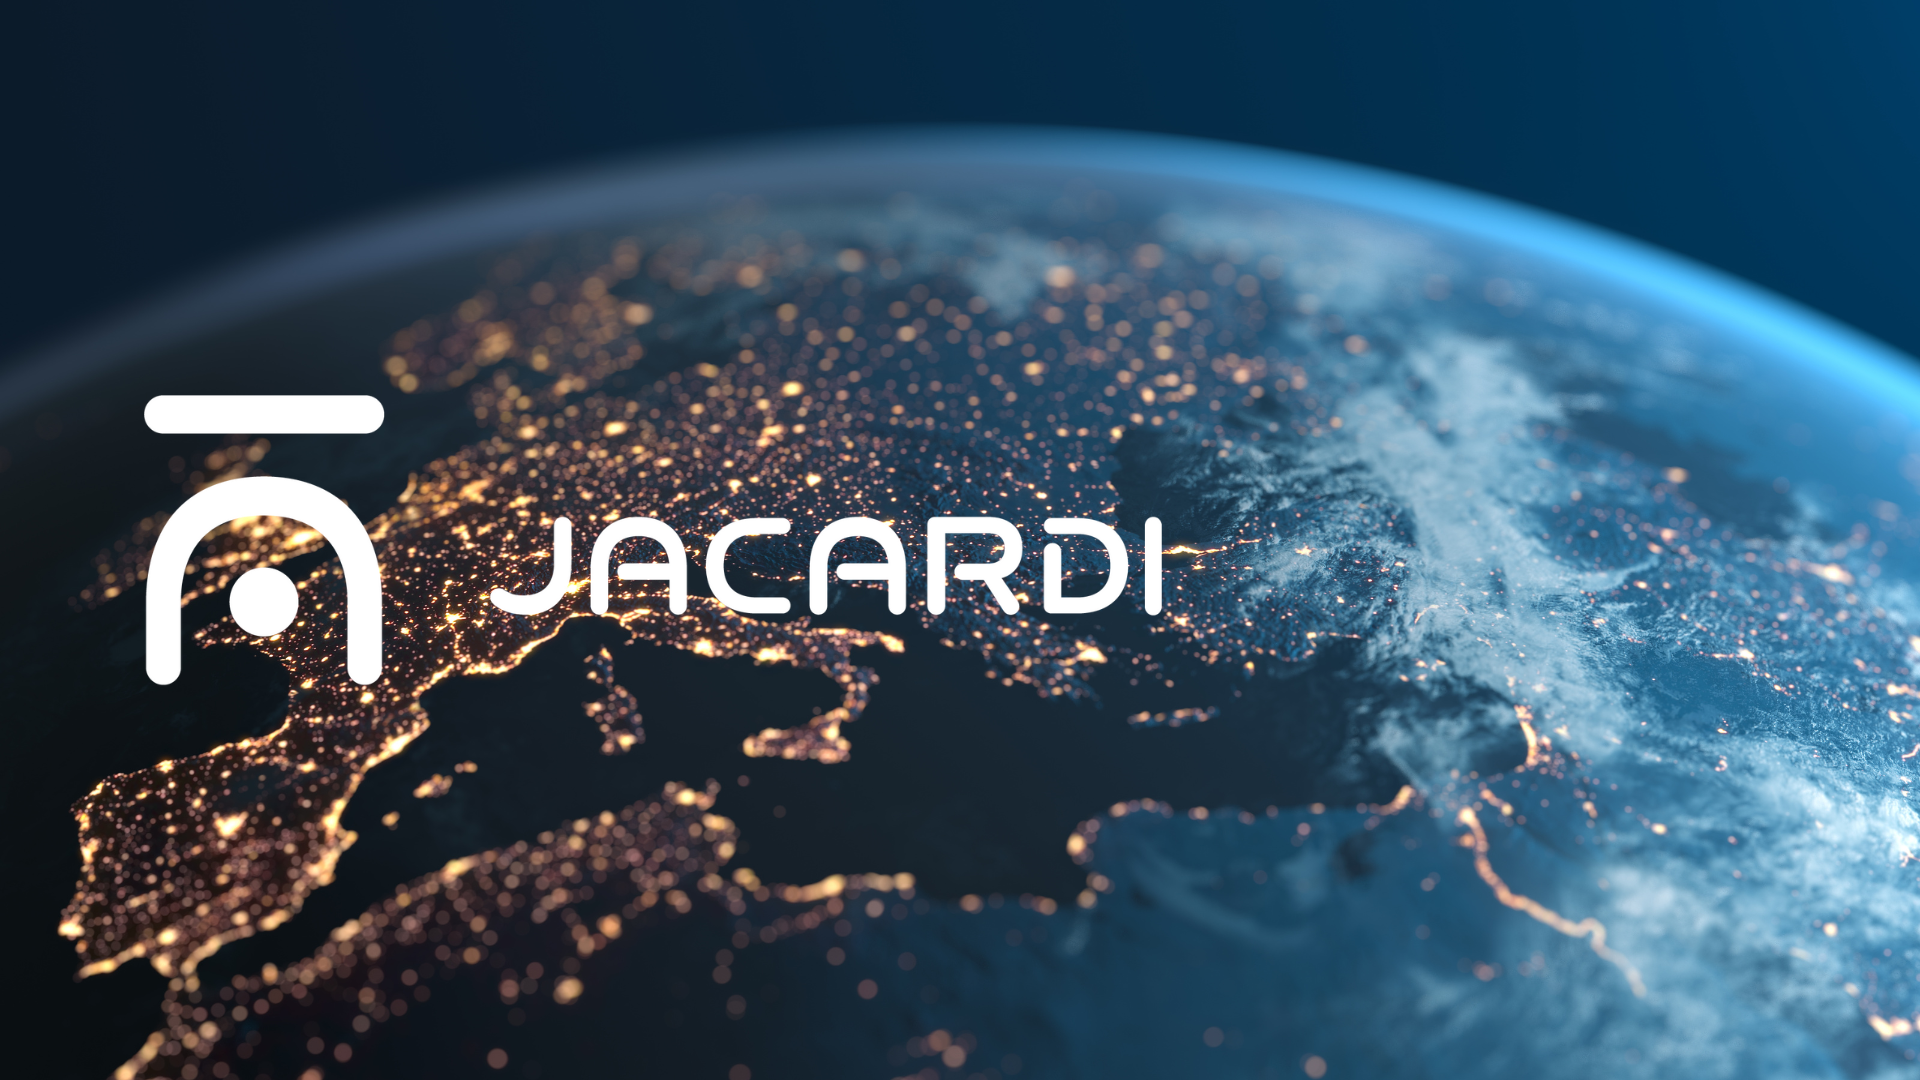 JACARDI for Europe